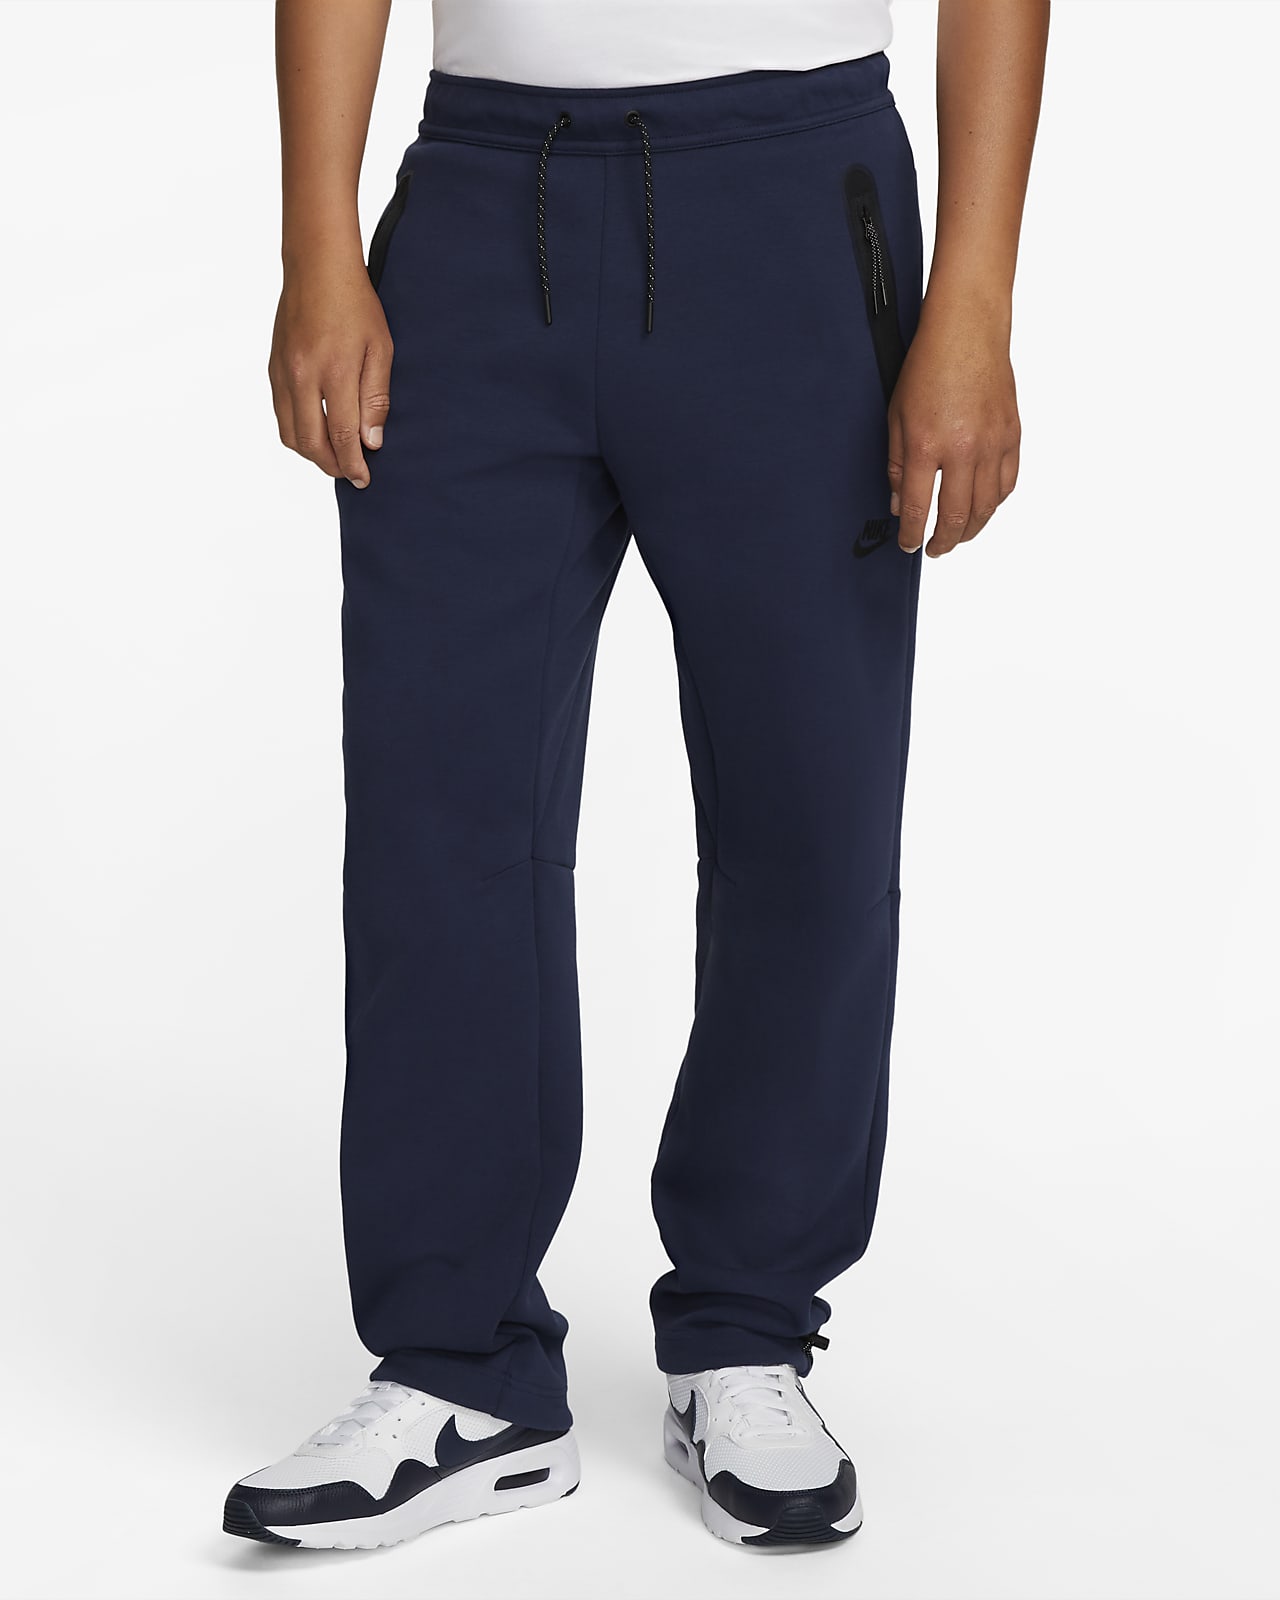 Nike JORDAN Active Sportswear Jogging Mens Tracksuit Bottoms Pants XL